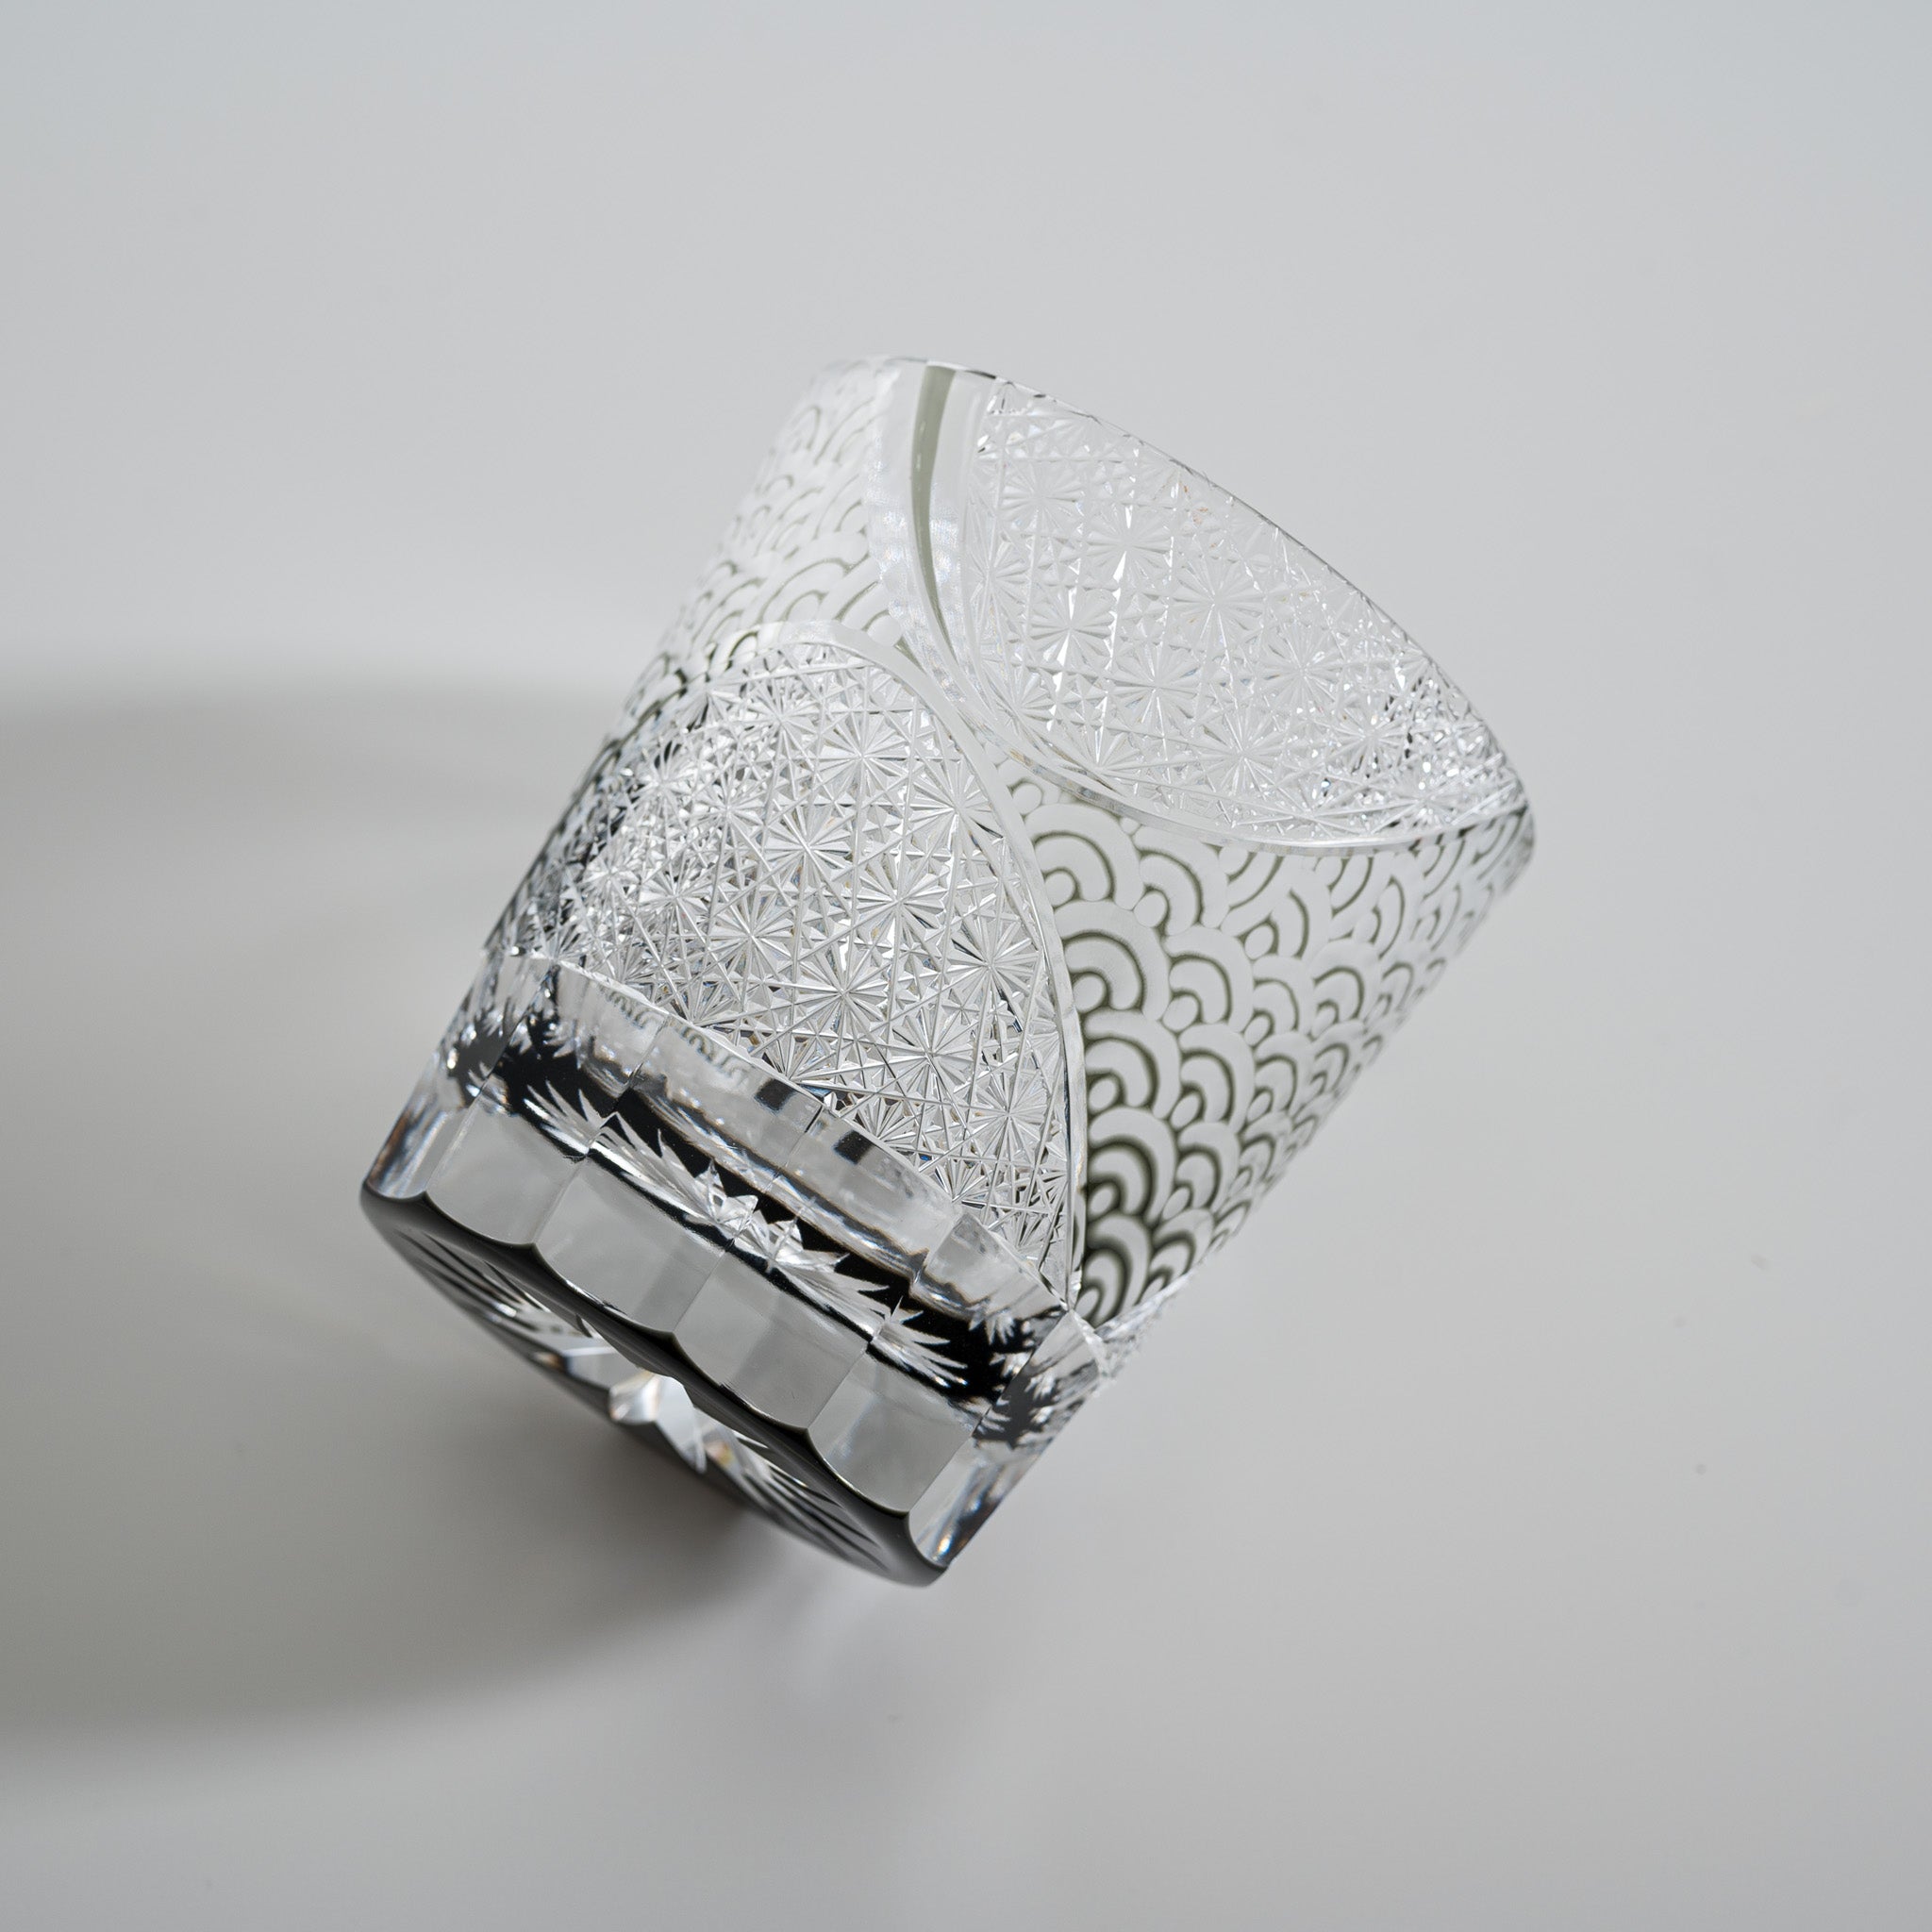 Yamada Glass - Crystal Glass Rock Glass - Wave - Black